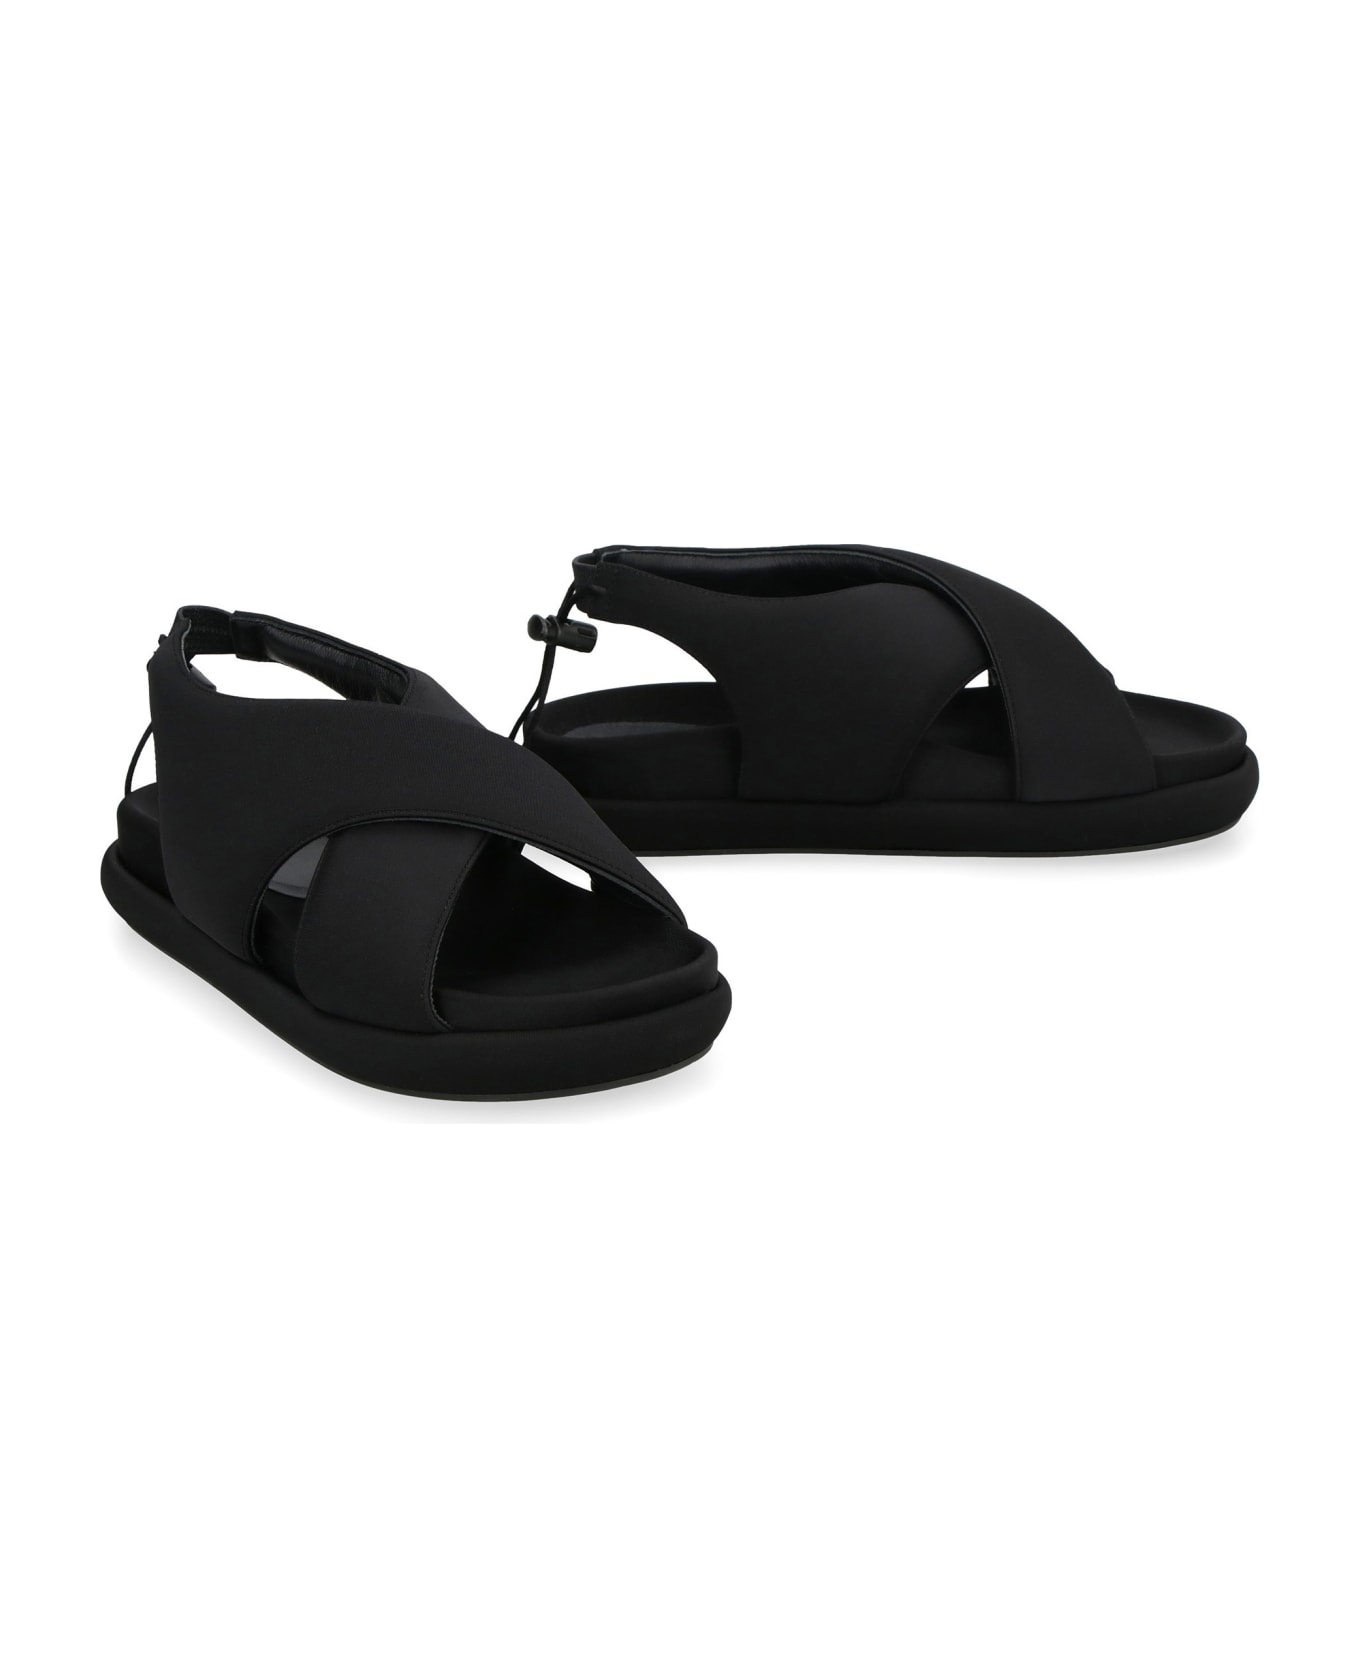 GIA BORGHINI Gia 29 Flat Sandals - black サンダル